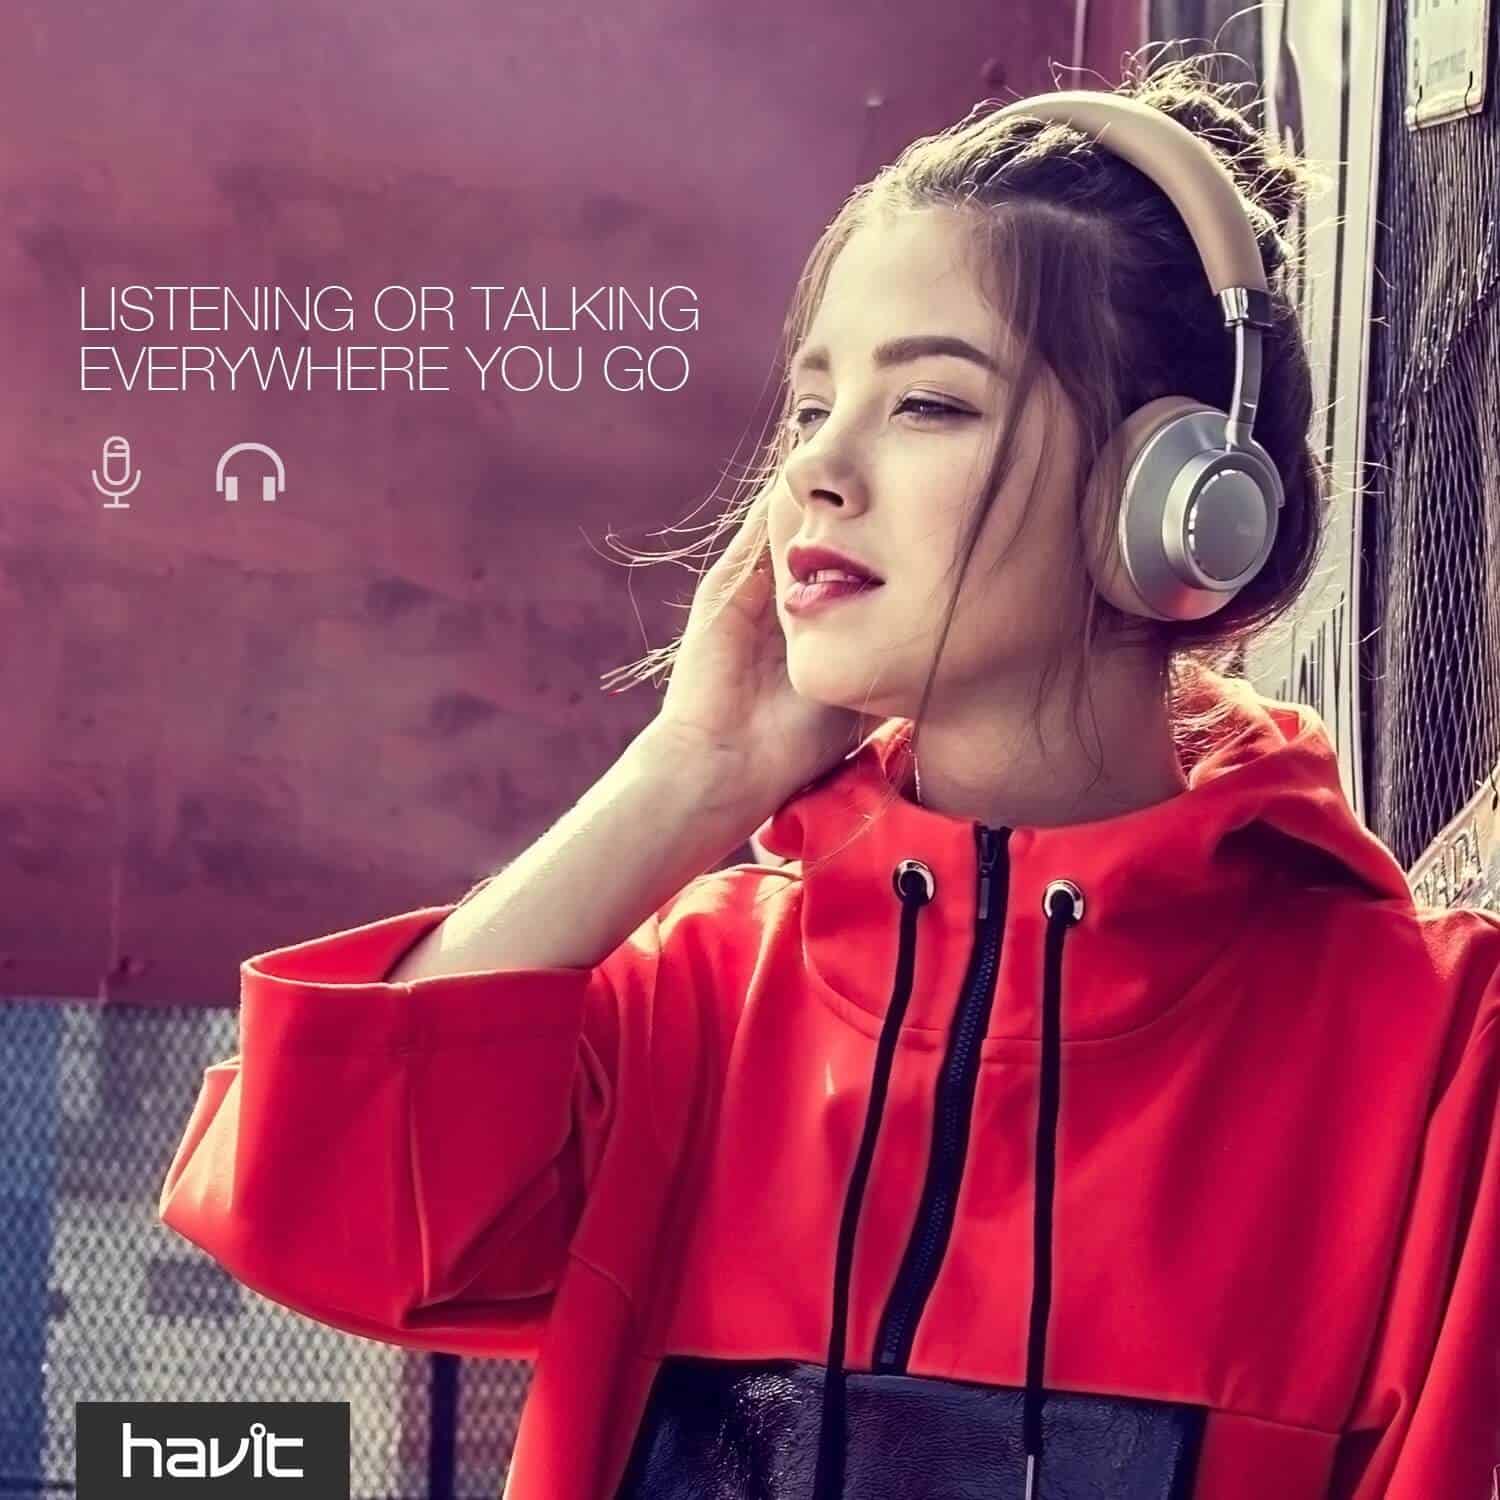 HAVIT I18 Wired / Wireless Headphones with Bluetooth 4.1